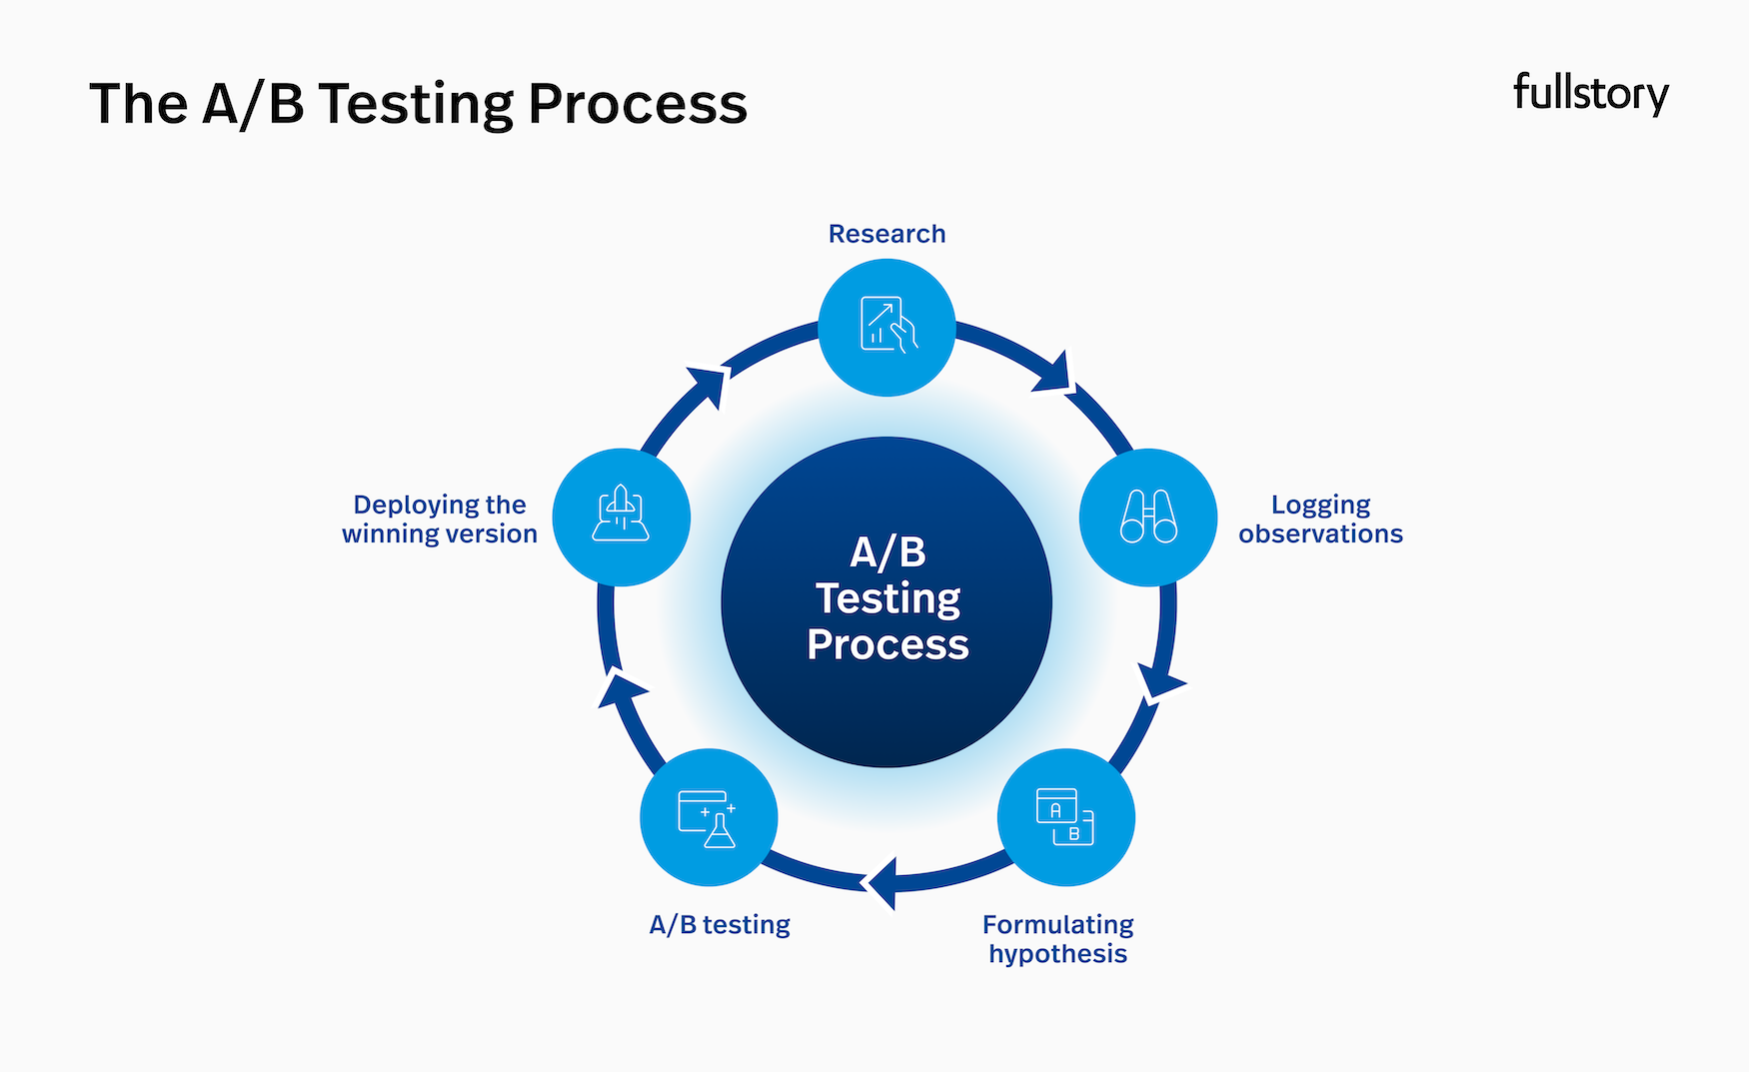 The A/B testing process